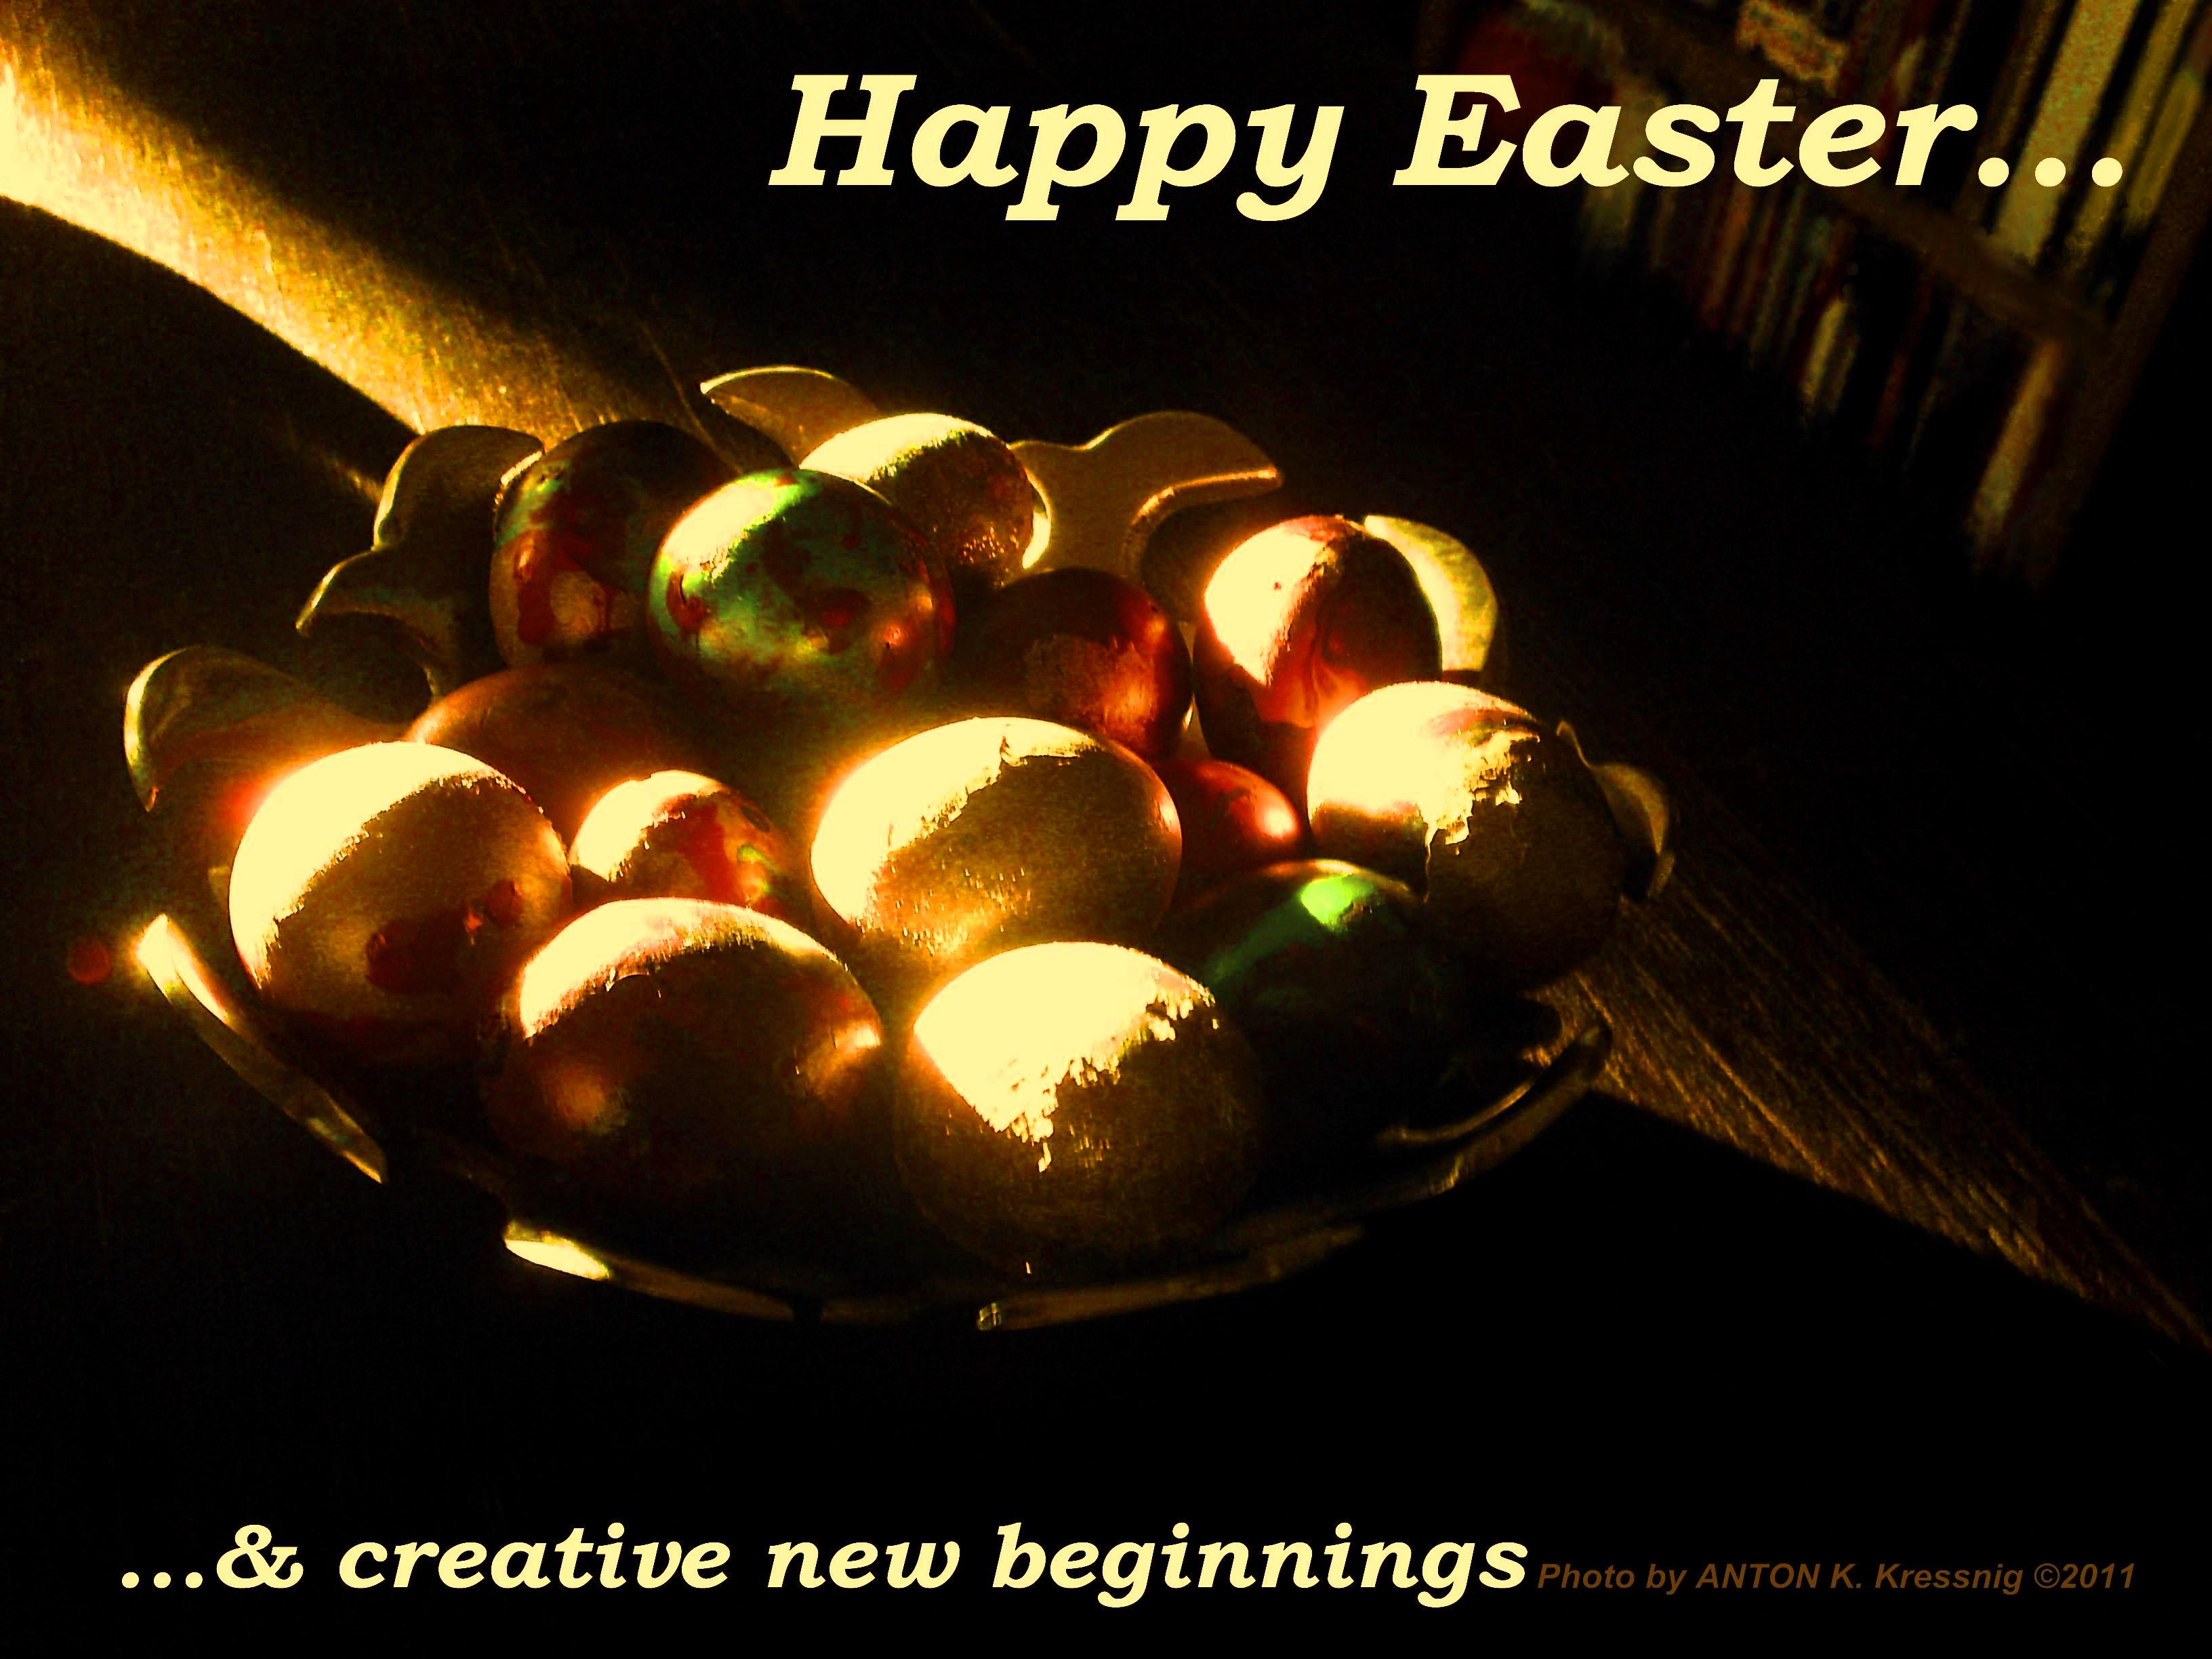 Happy Easter & creative new beginnings ~ photo by Anton K